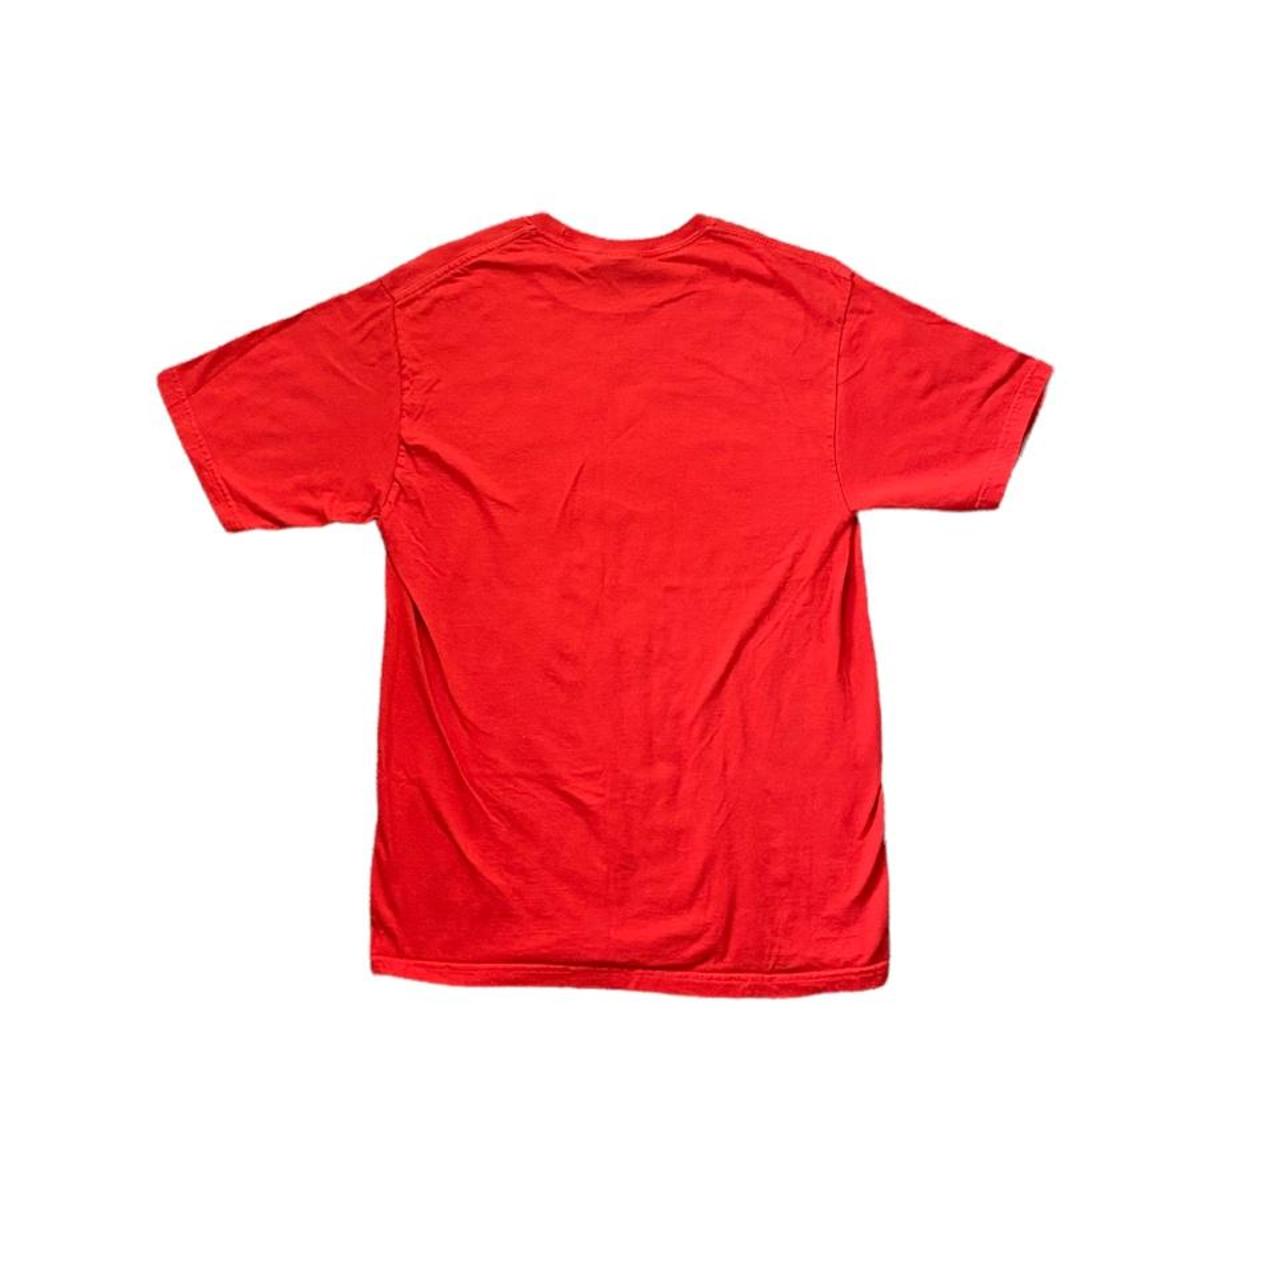 Product Image 2 - Vintage Stussy N4 shirt.


Vintage Red